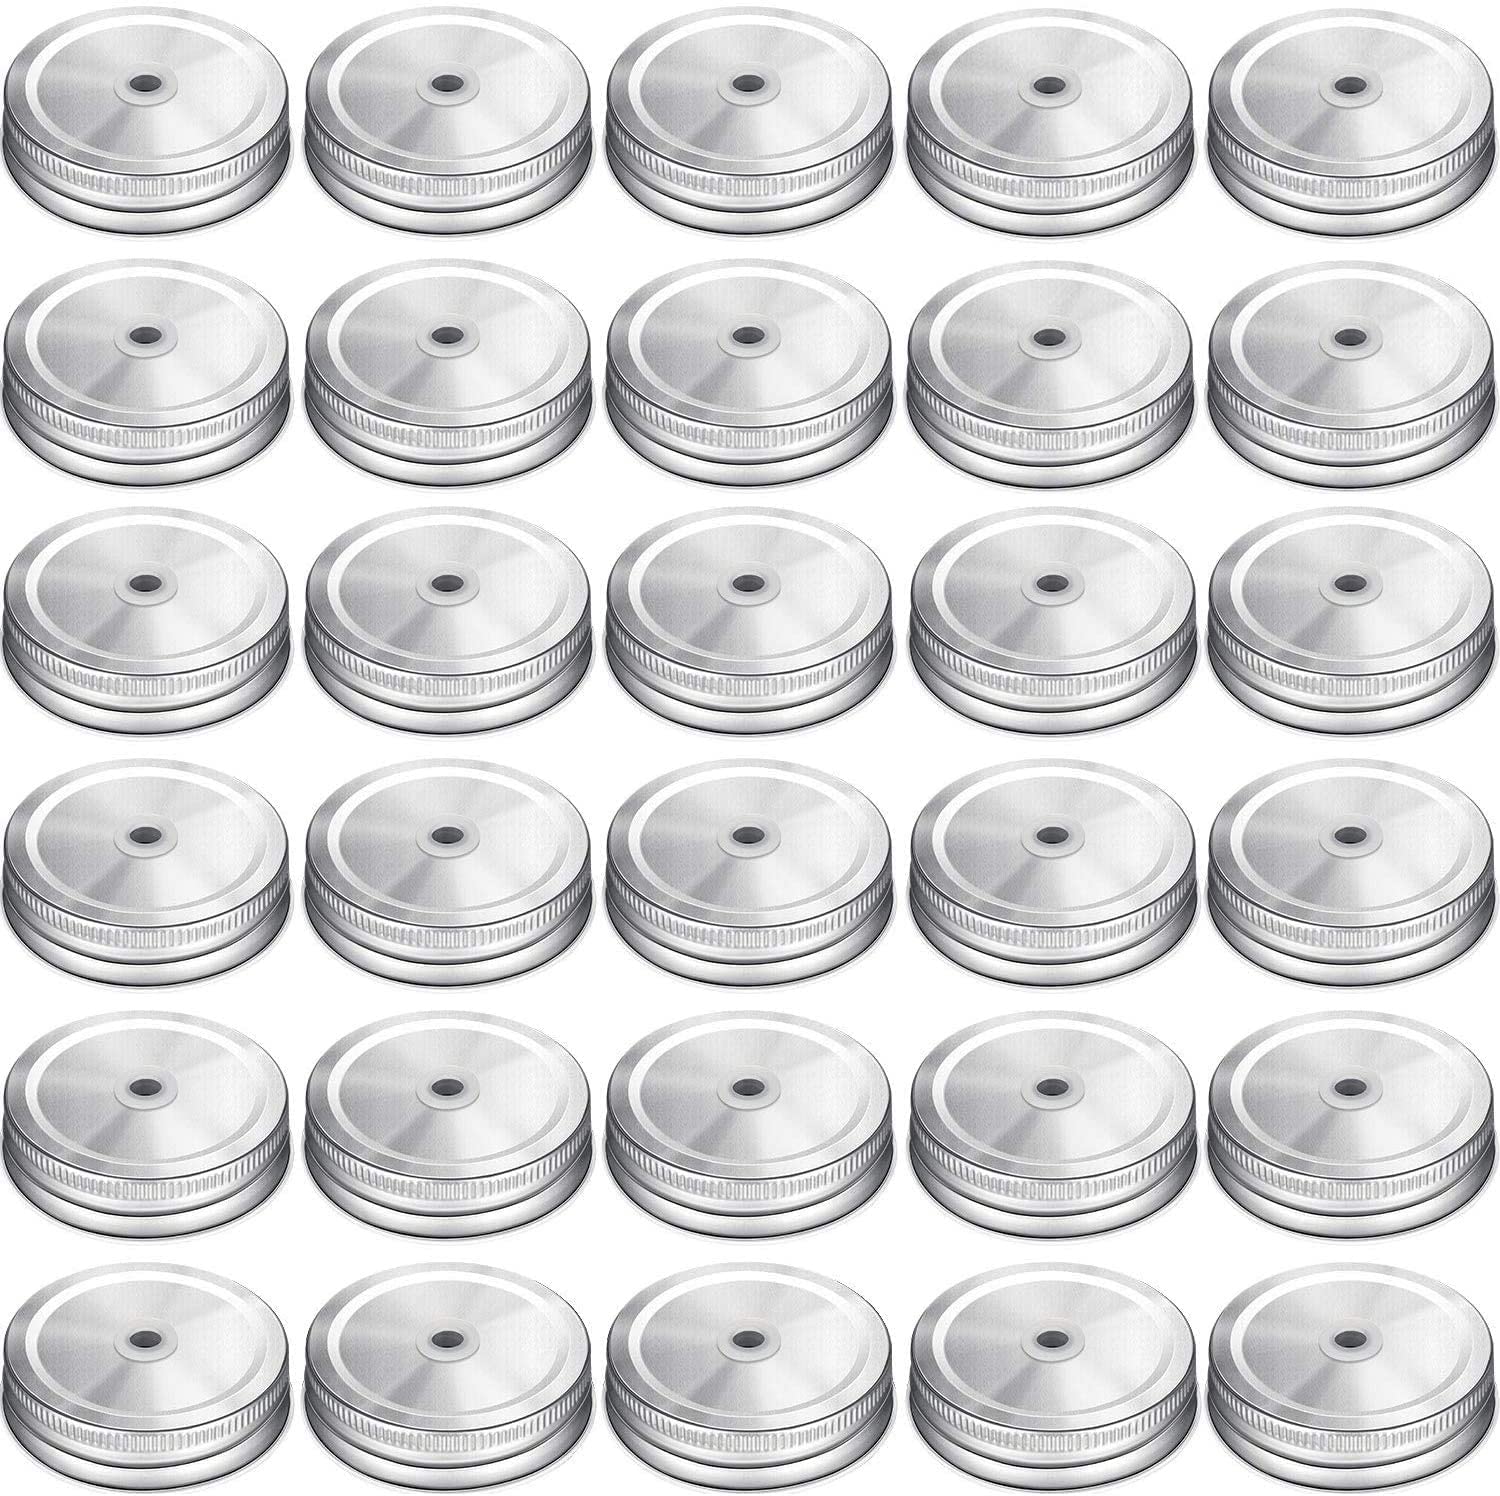 Gisedkle 30 Pcs Regular Mouth Mason Jar Lids with Straw Hole Compatible，Metal Mason Canning Lids Decorative Mason Jar Caps for Drinking&Food Storage.